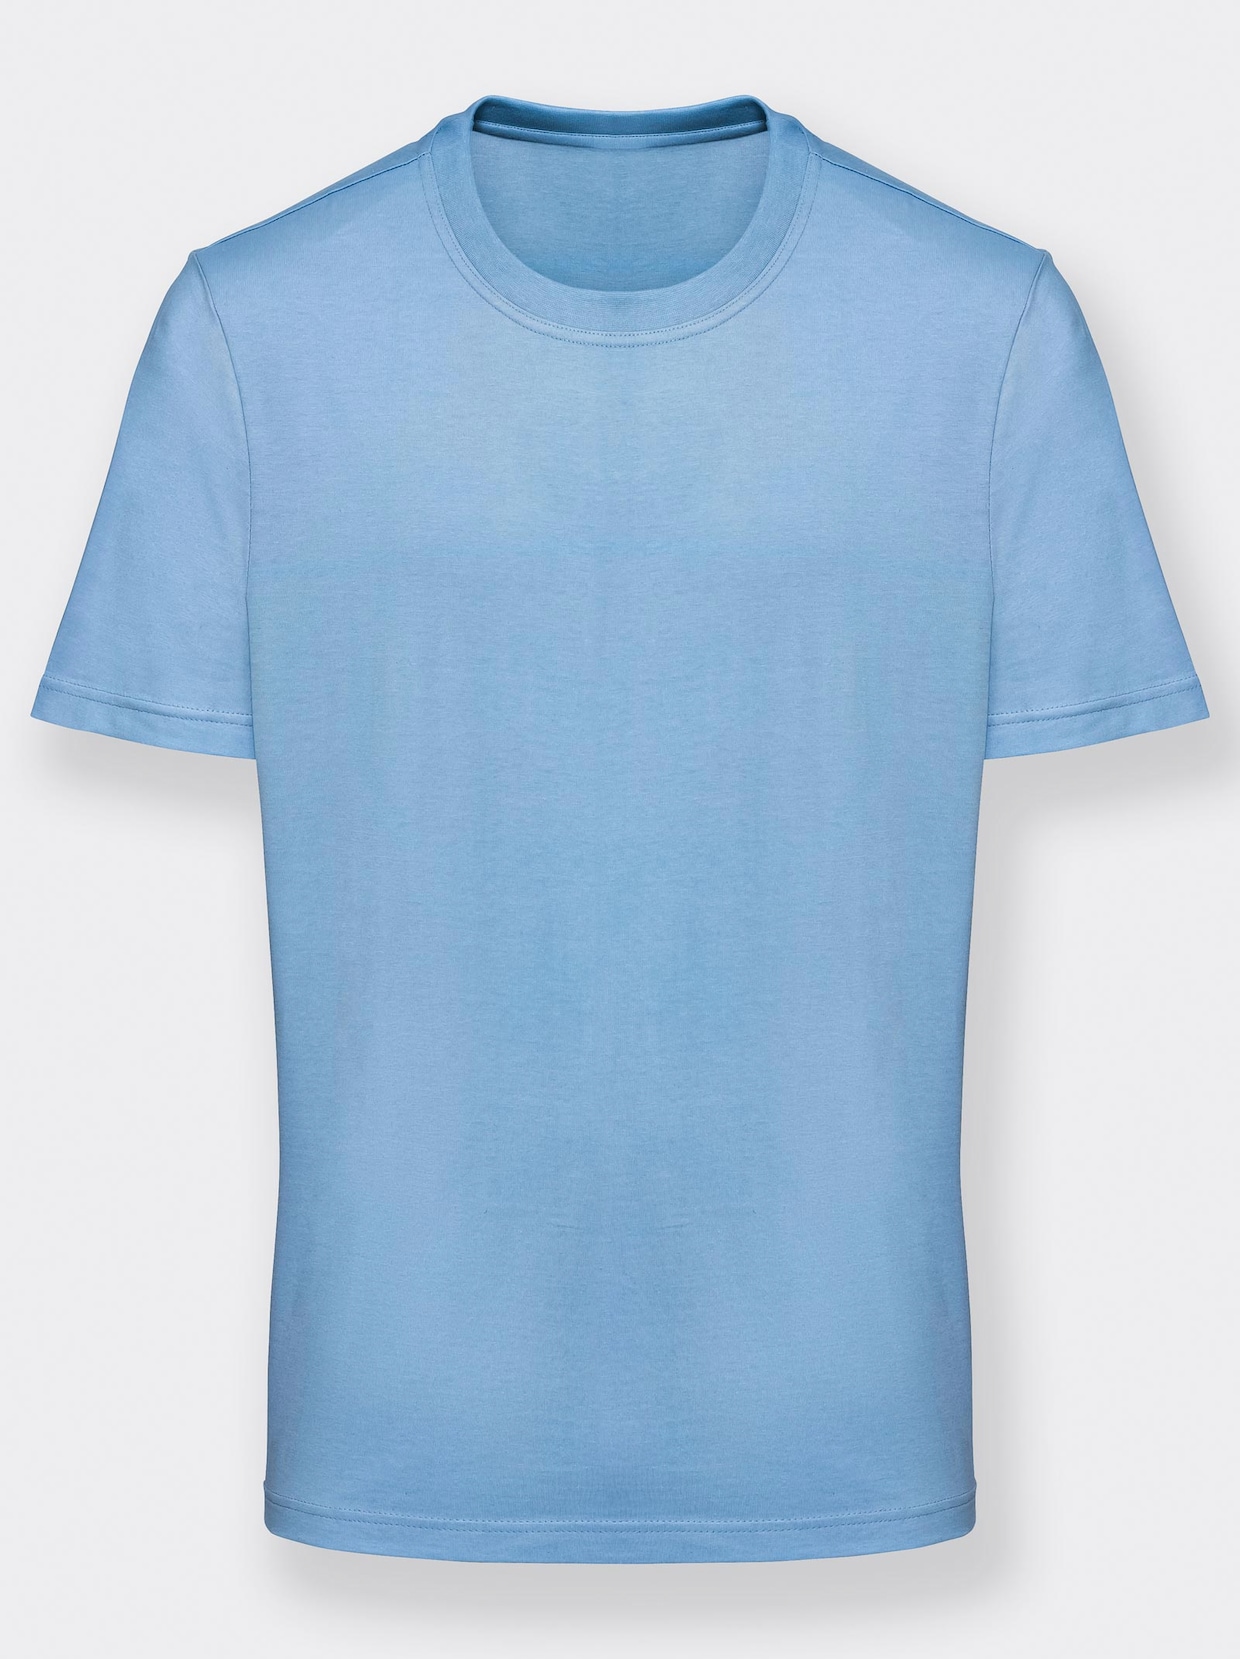 KINGsCLUB Shirt - anthrazit + blau + weiß